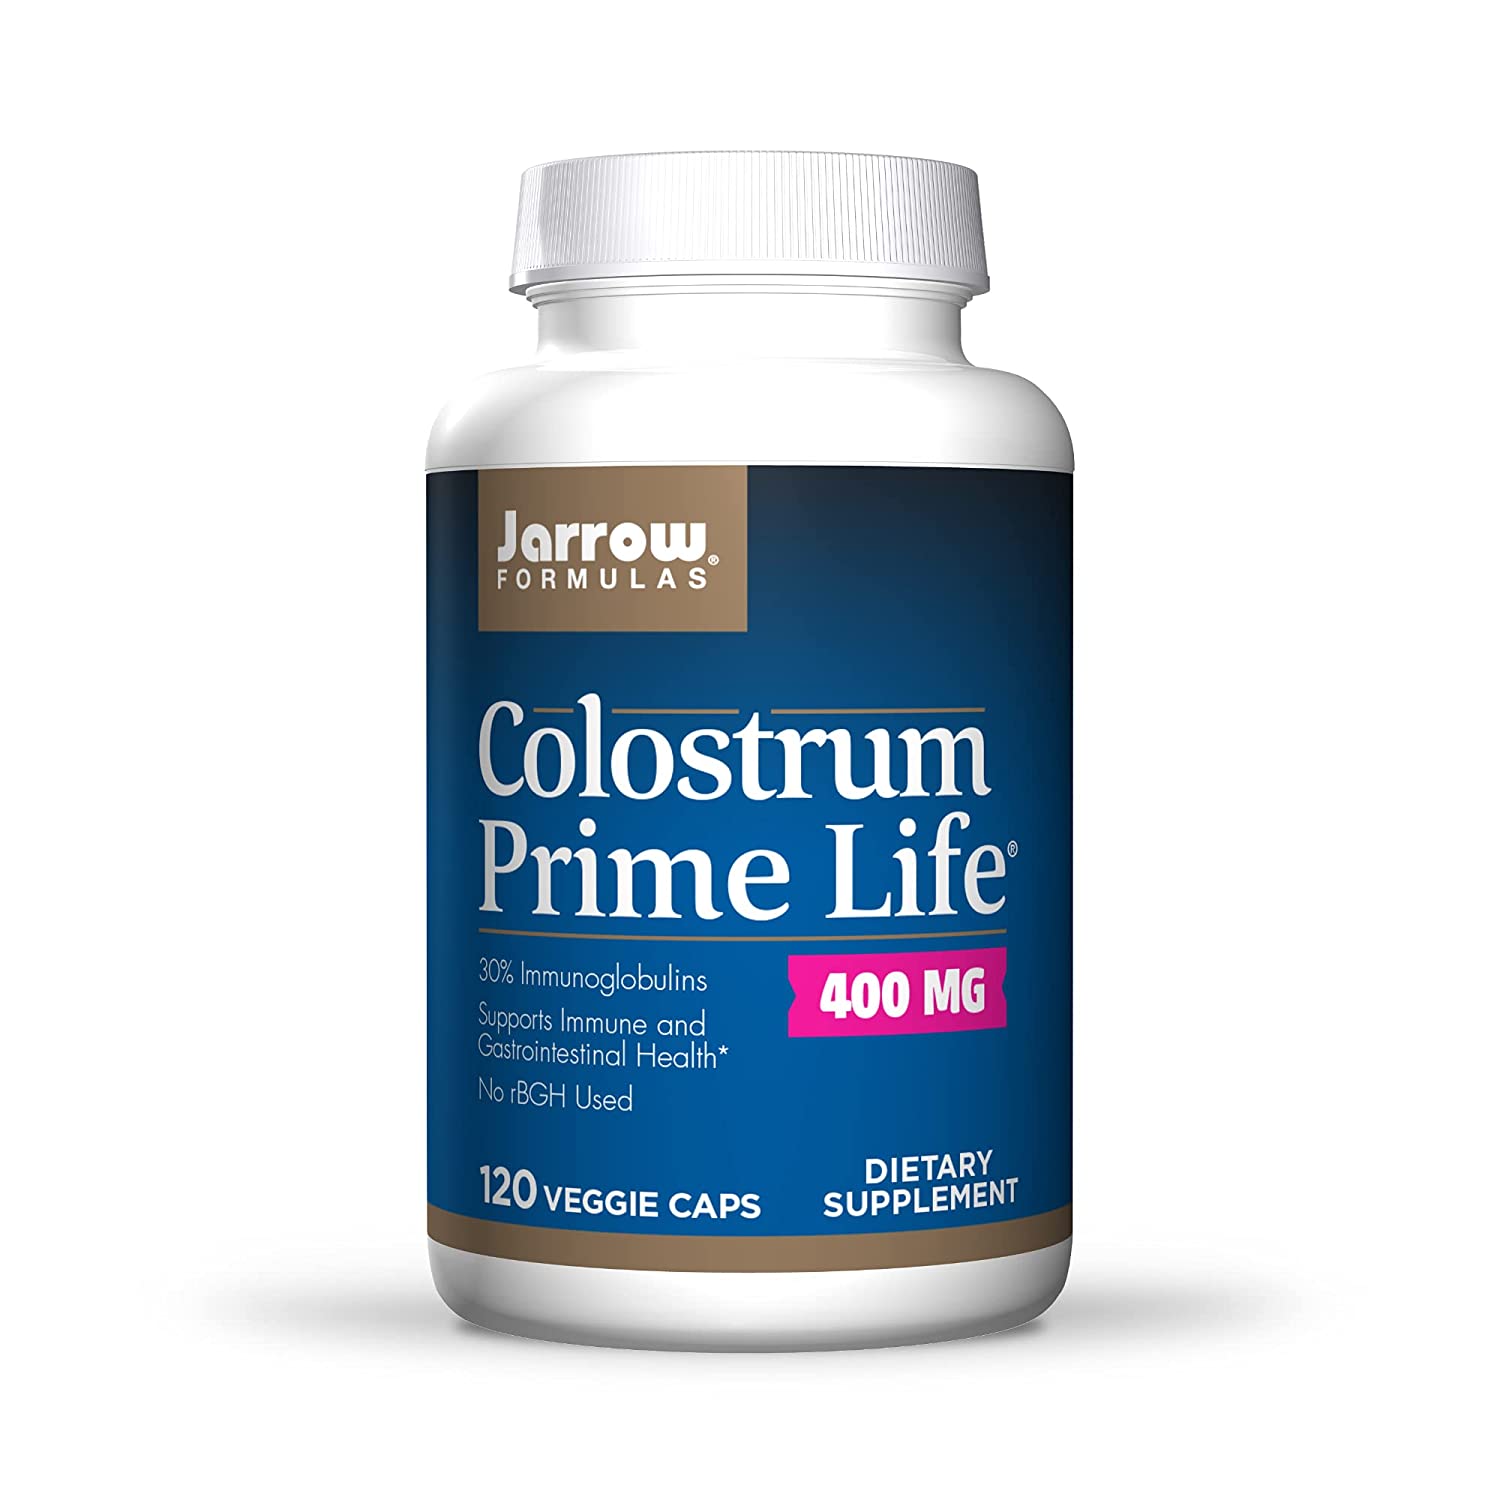 Jarrow Formulas Colostrum Prime Life 400 mg - 120 Veggie Caps - Contains 30% Immunoglobulins - Supports Immune & Gastrointestinal Health - Up to 120 Servings